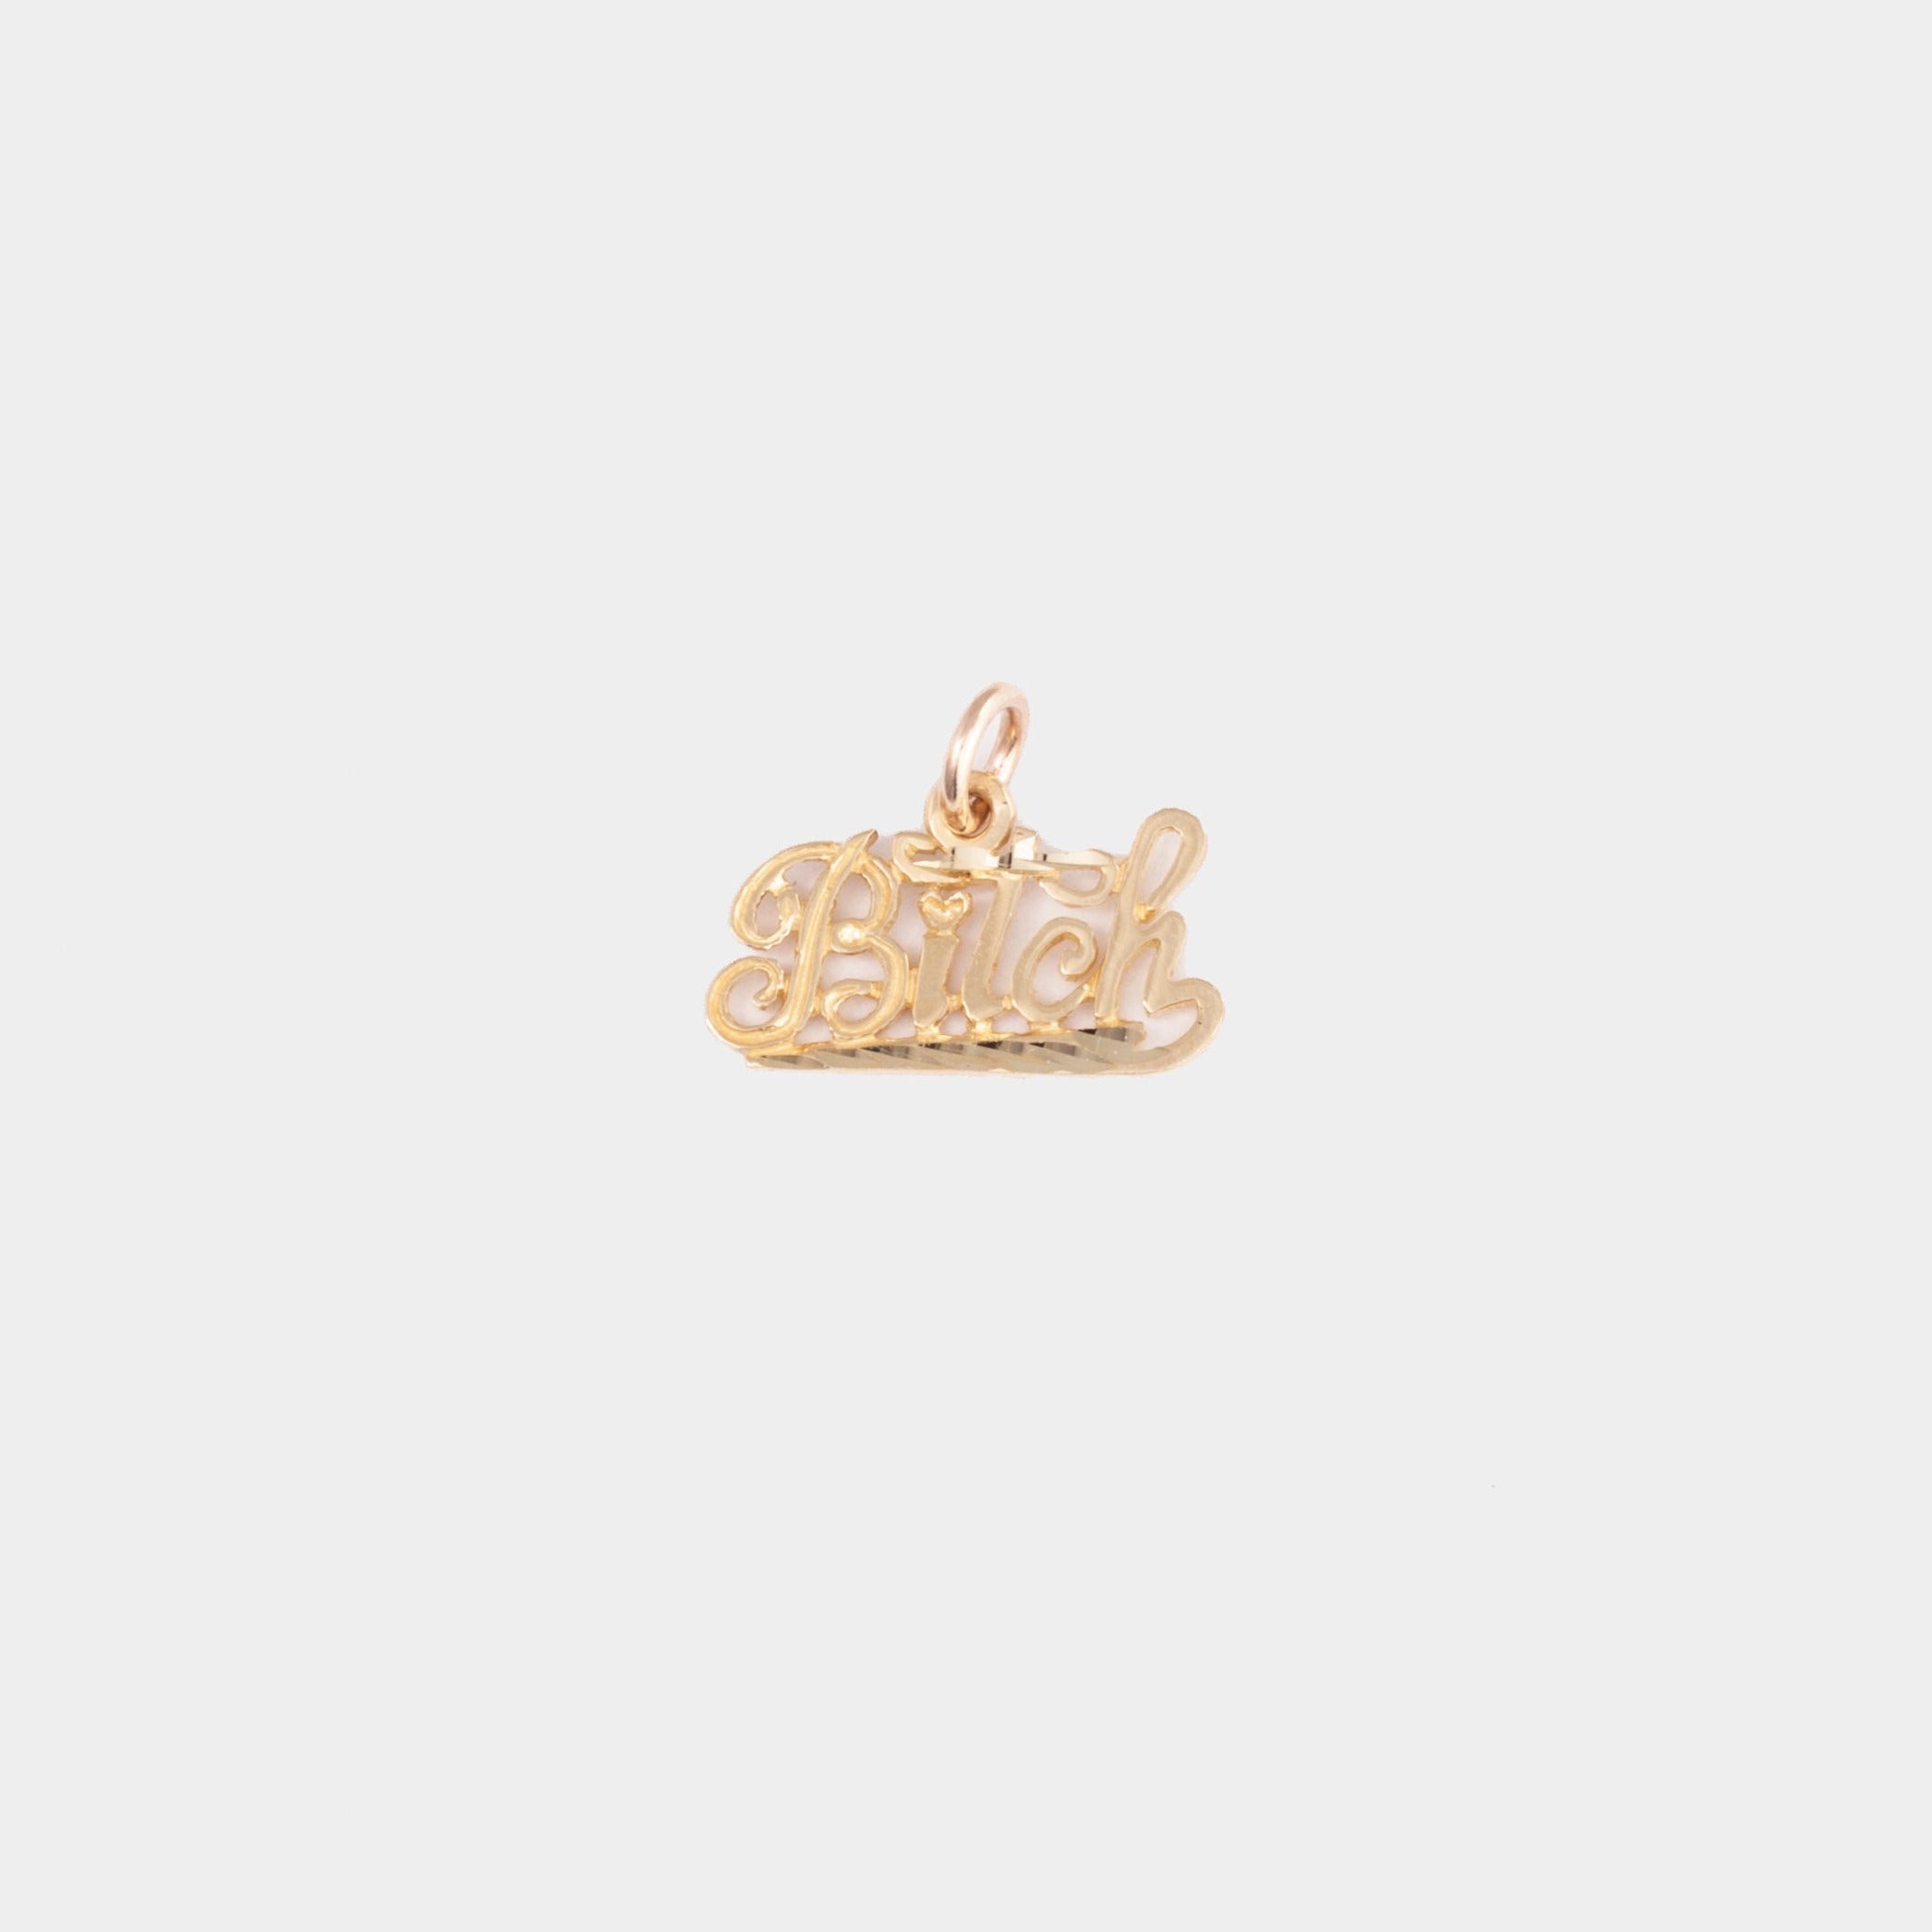 10K gold "Bitch" pendant